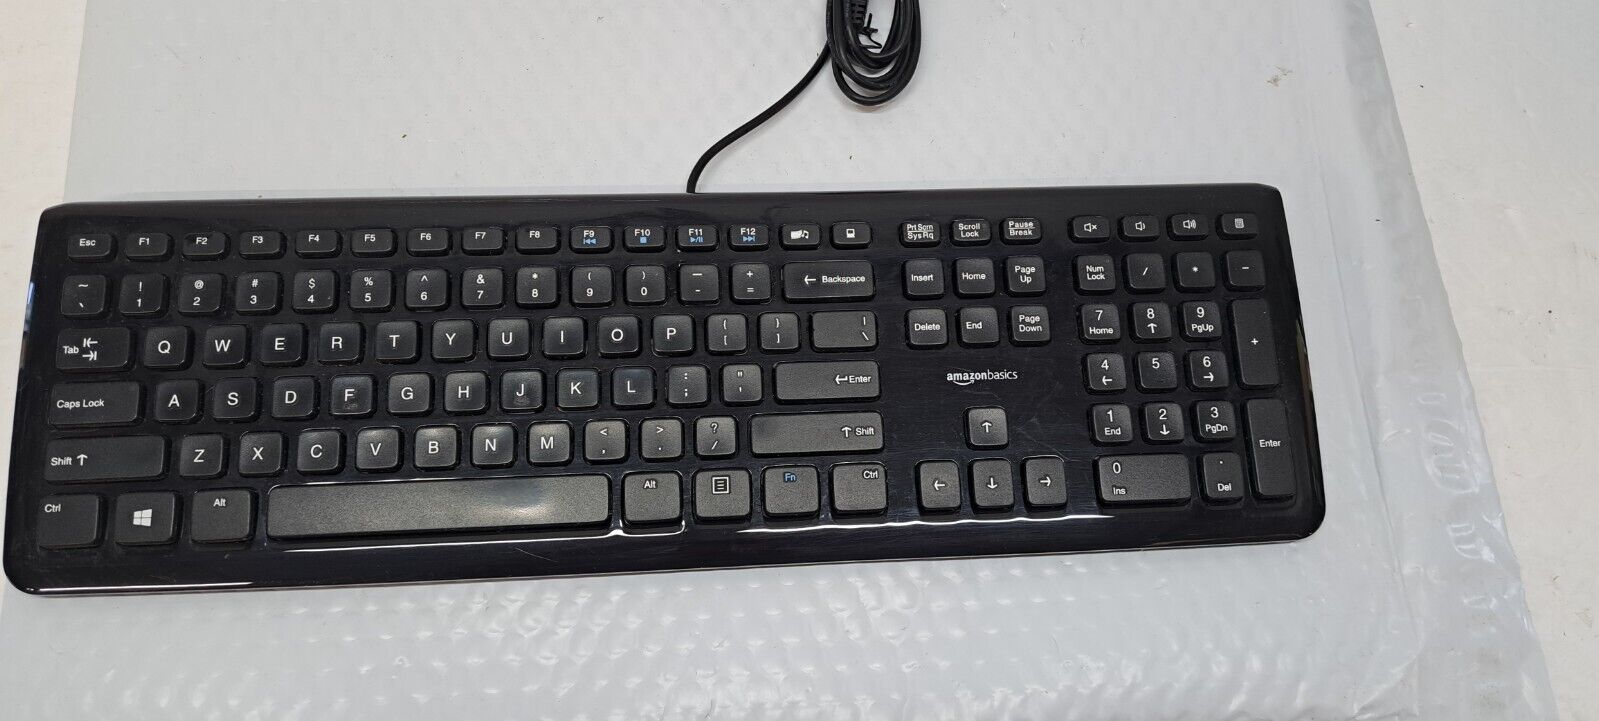 Amazon Basics USB Wired Black Keyboard Model KU-0833 Very Good 8/9 1